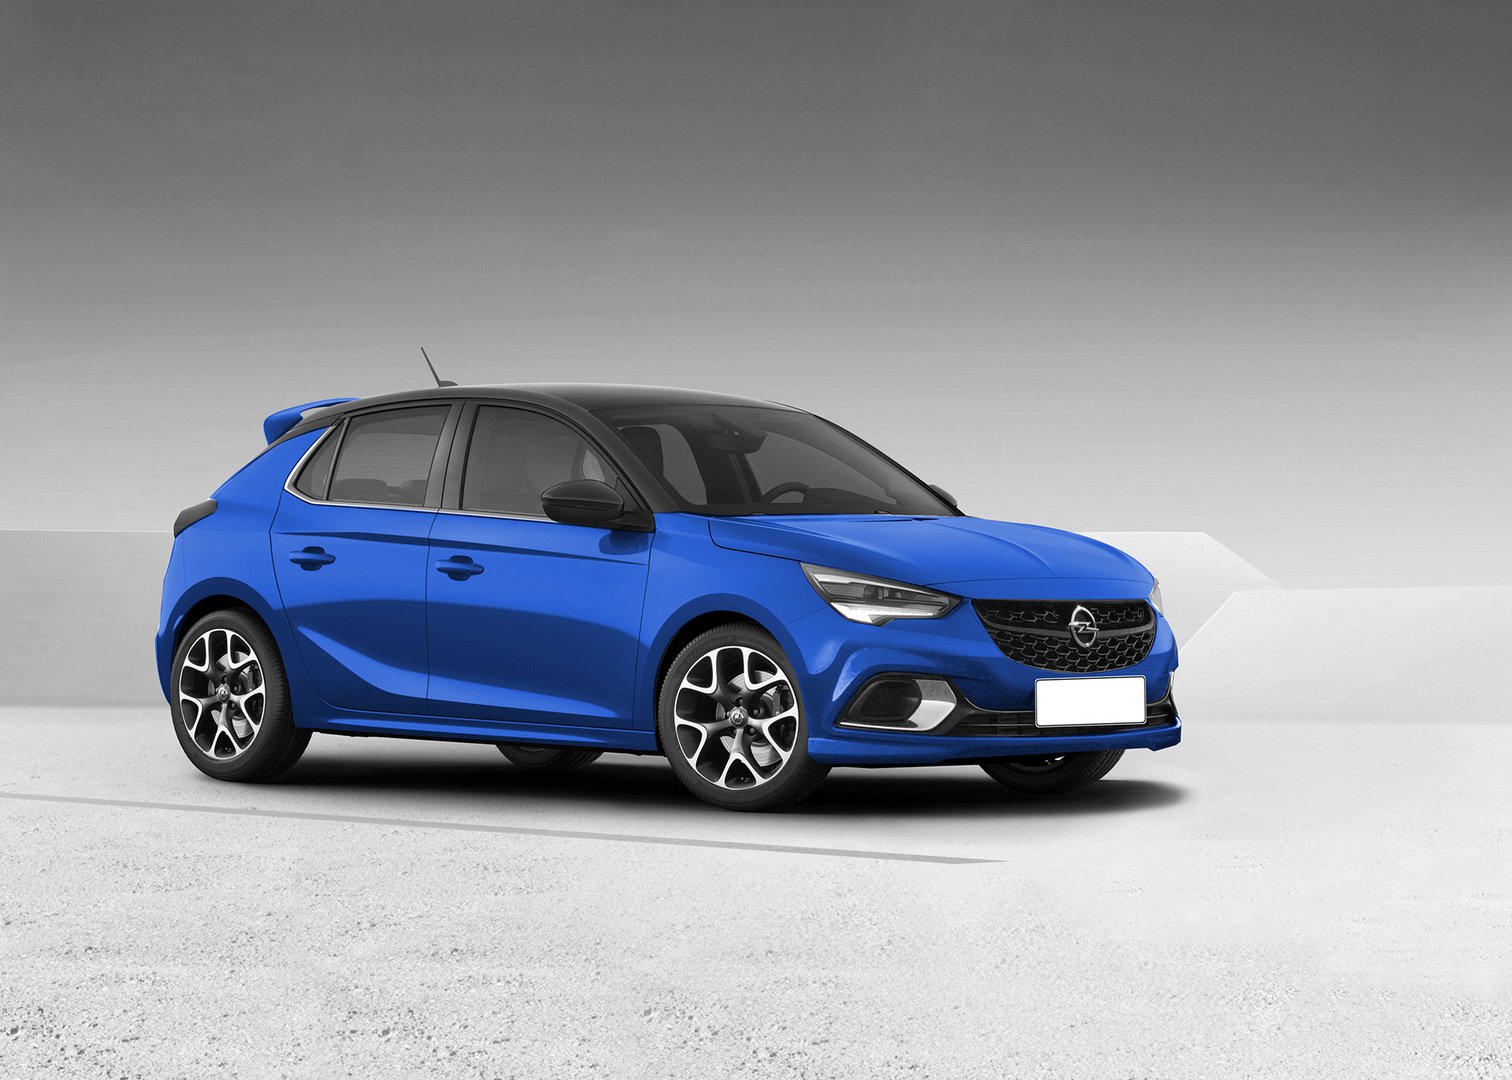 https://www.autonocion.com/wp-content/uploads/2019/05/Opel-Corsa-OPC-render-1.jpg